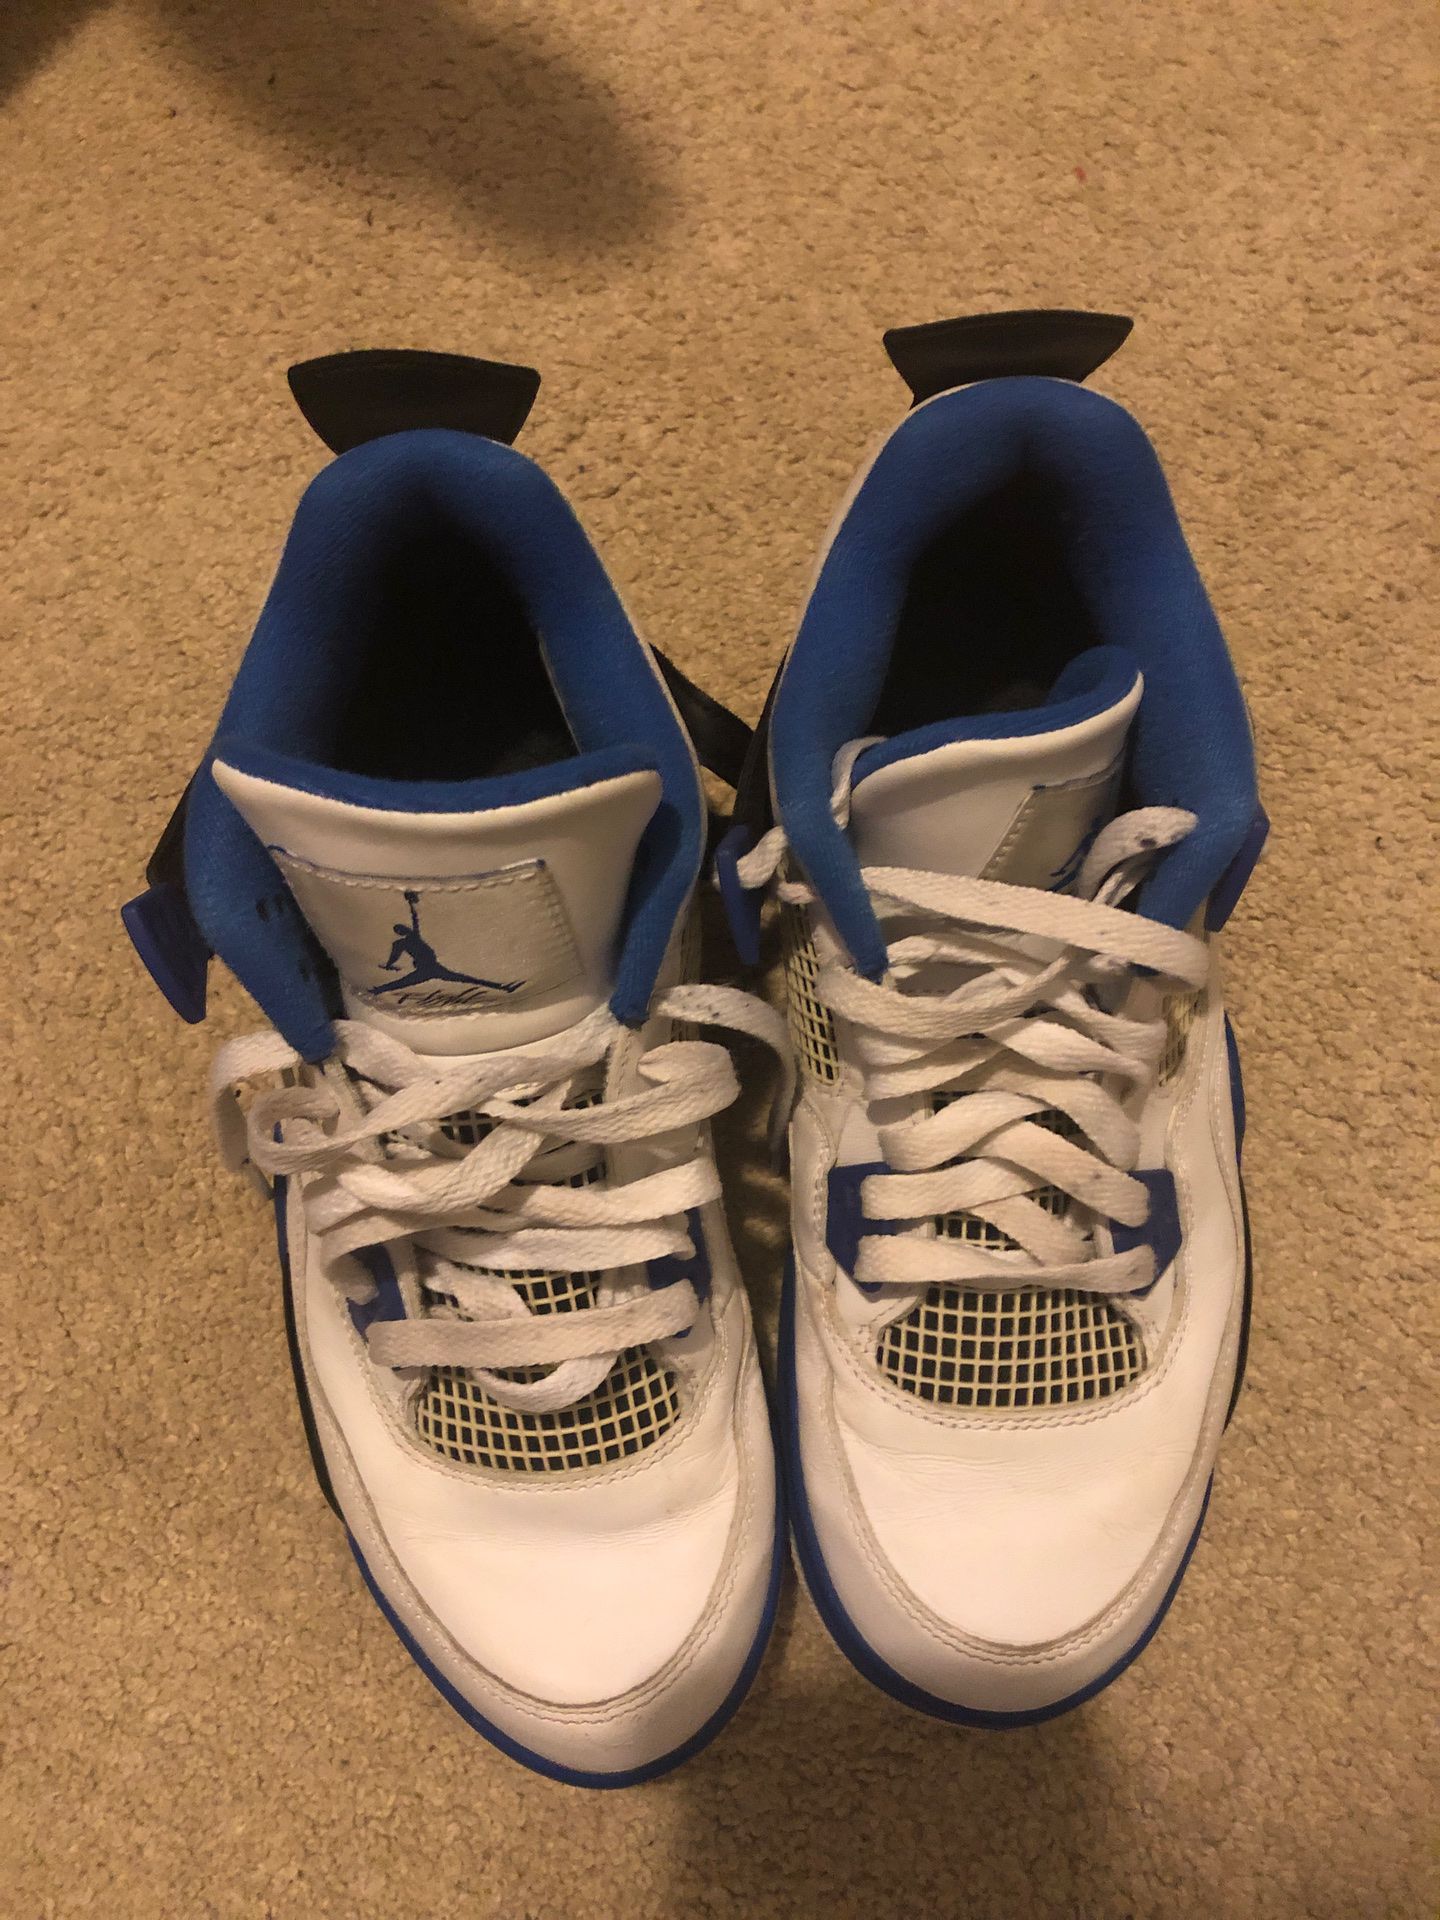 Jordan 4’s blue retro